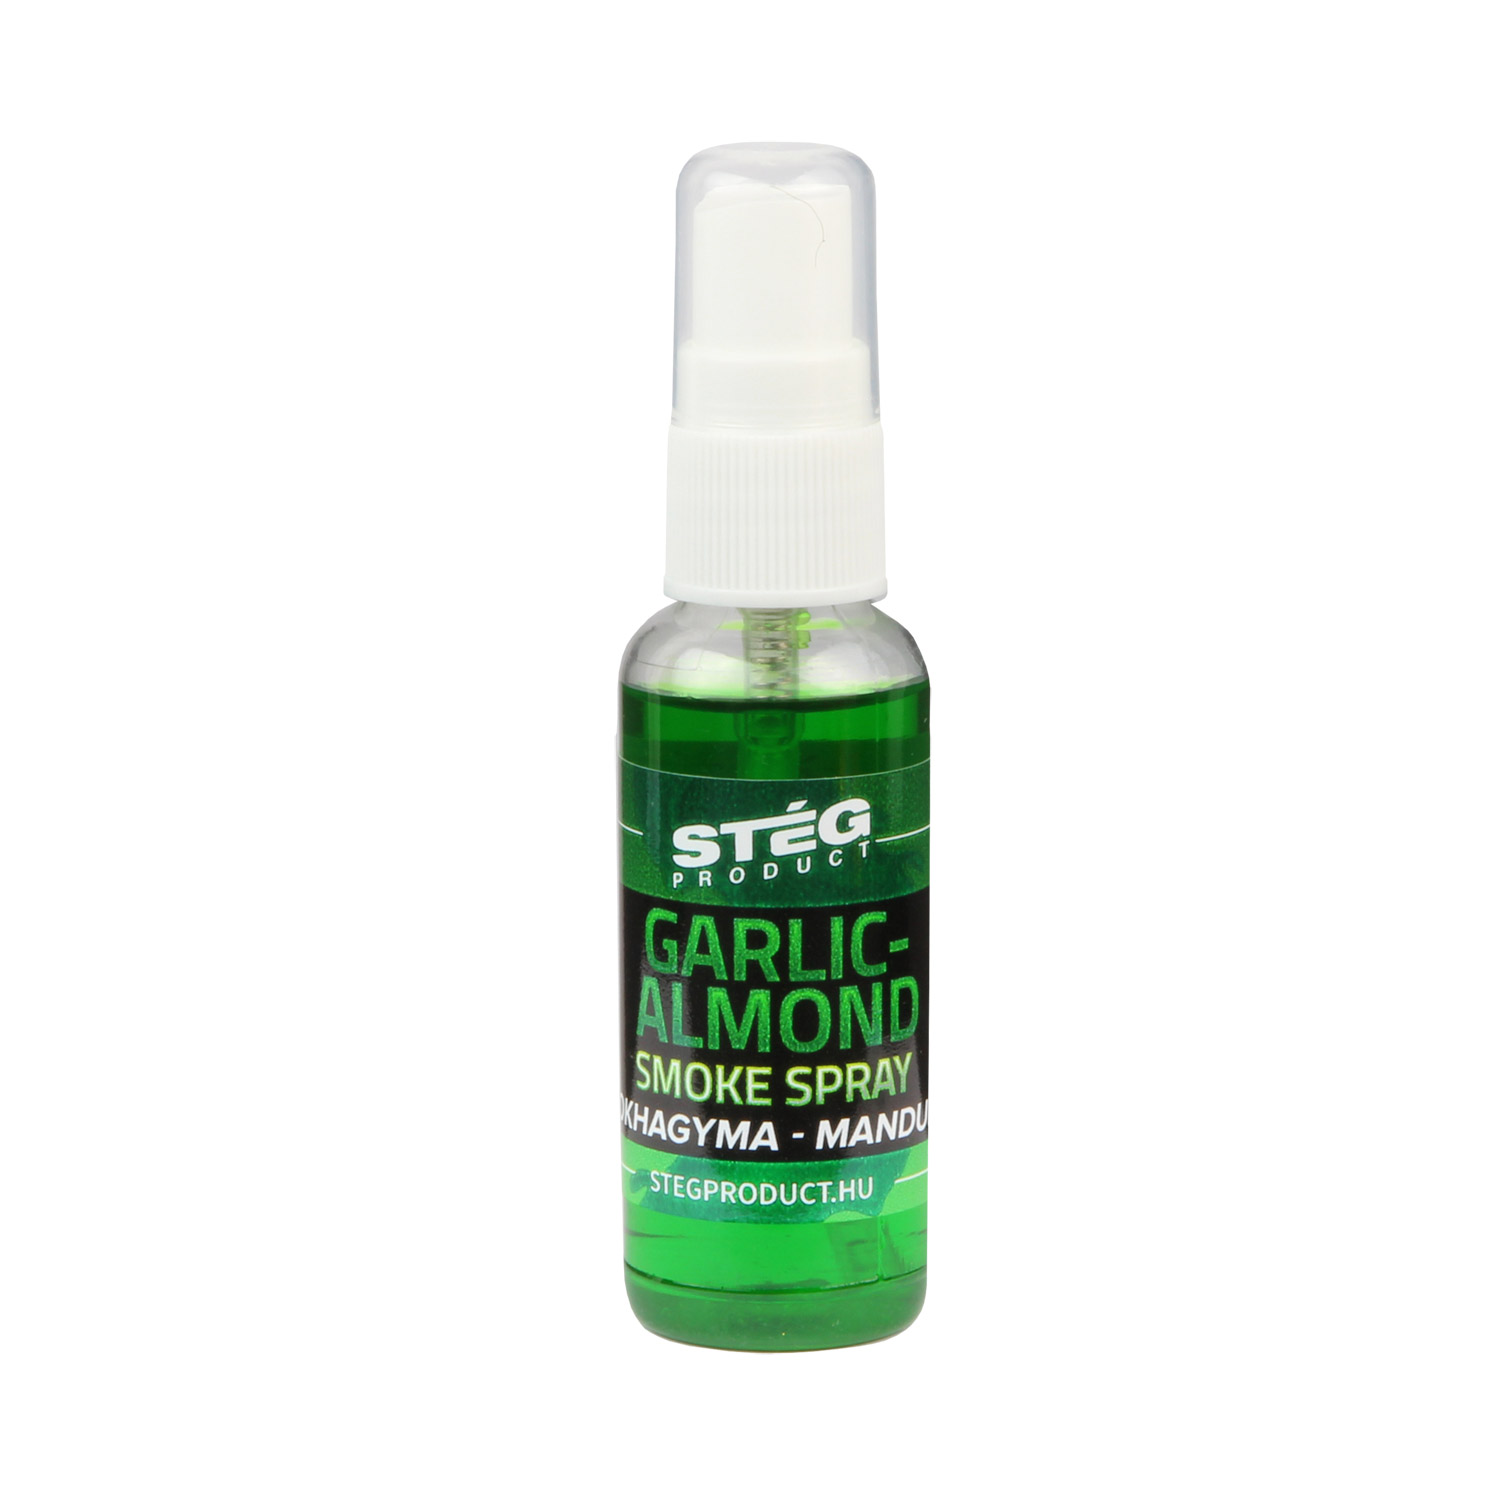 Stg Product Smoke Spray Garlic-Almond 30ml